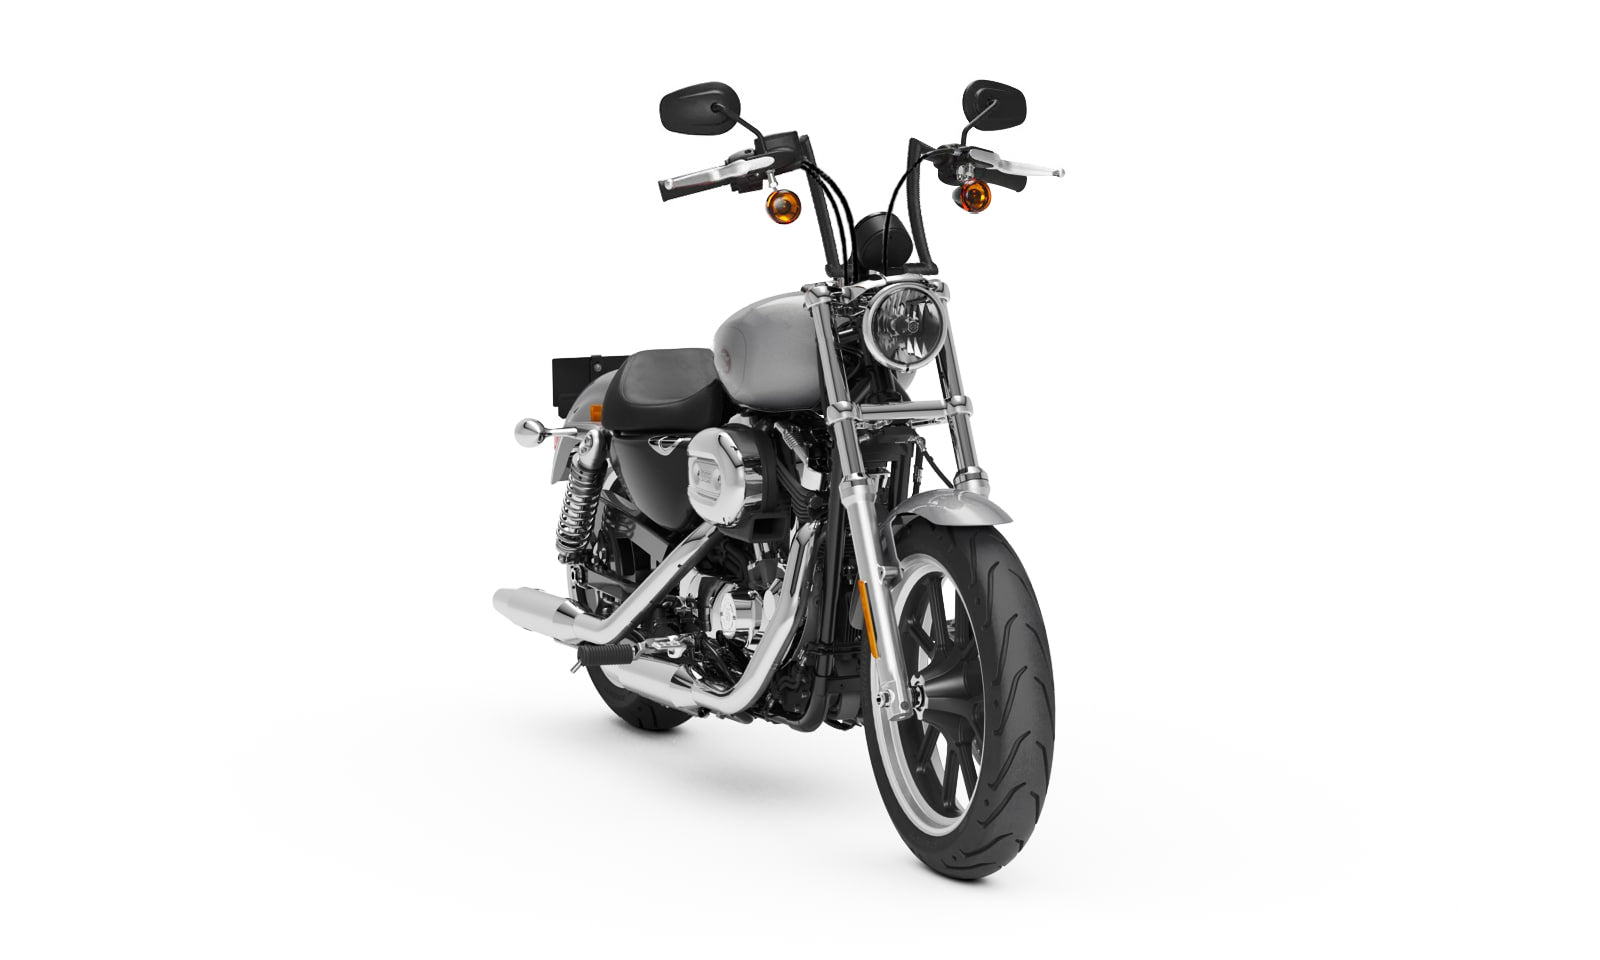 Viking Iron Born 9" Handlebar for Harley Sportster Superlow Matte Black Bag on Bike View @expand